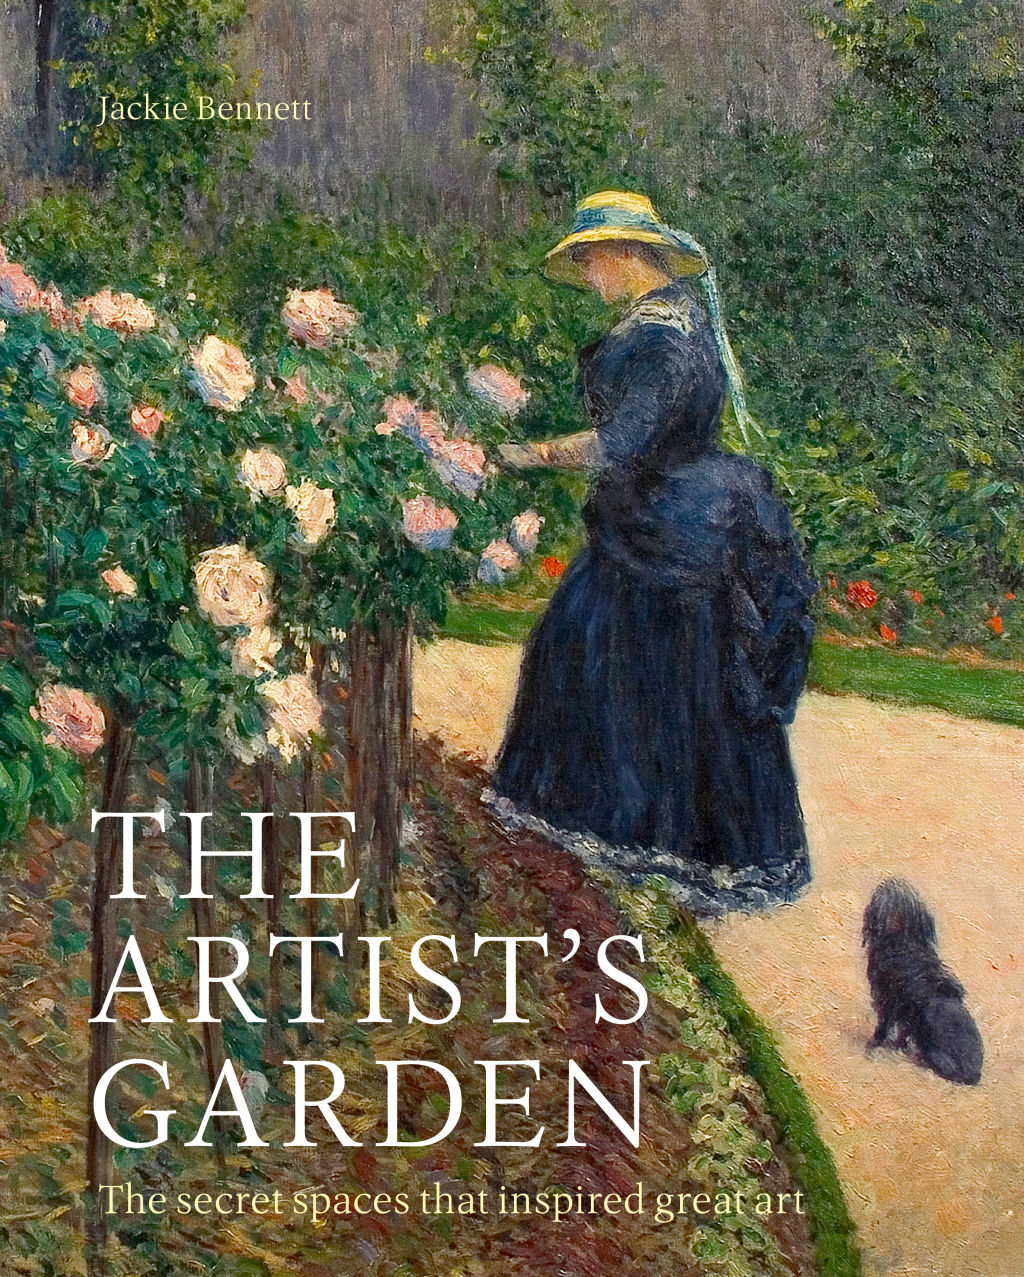 The Artist's Garden by Jackie Bennett. Photo: Murdoch